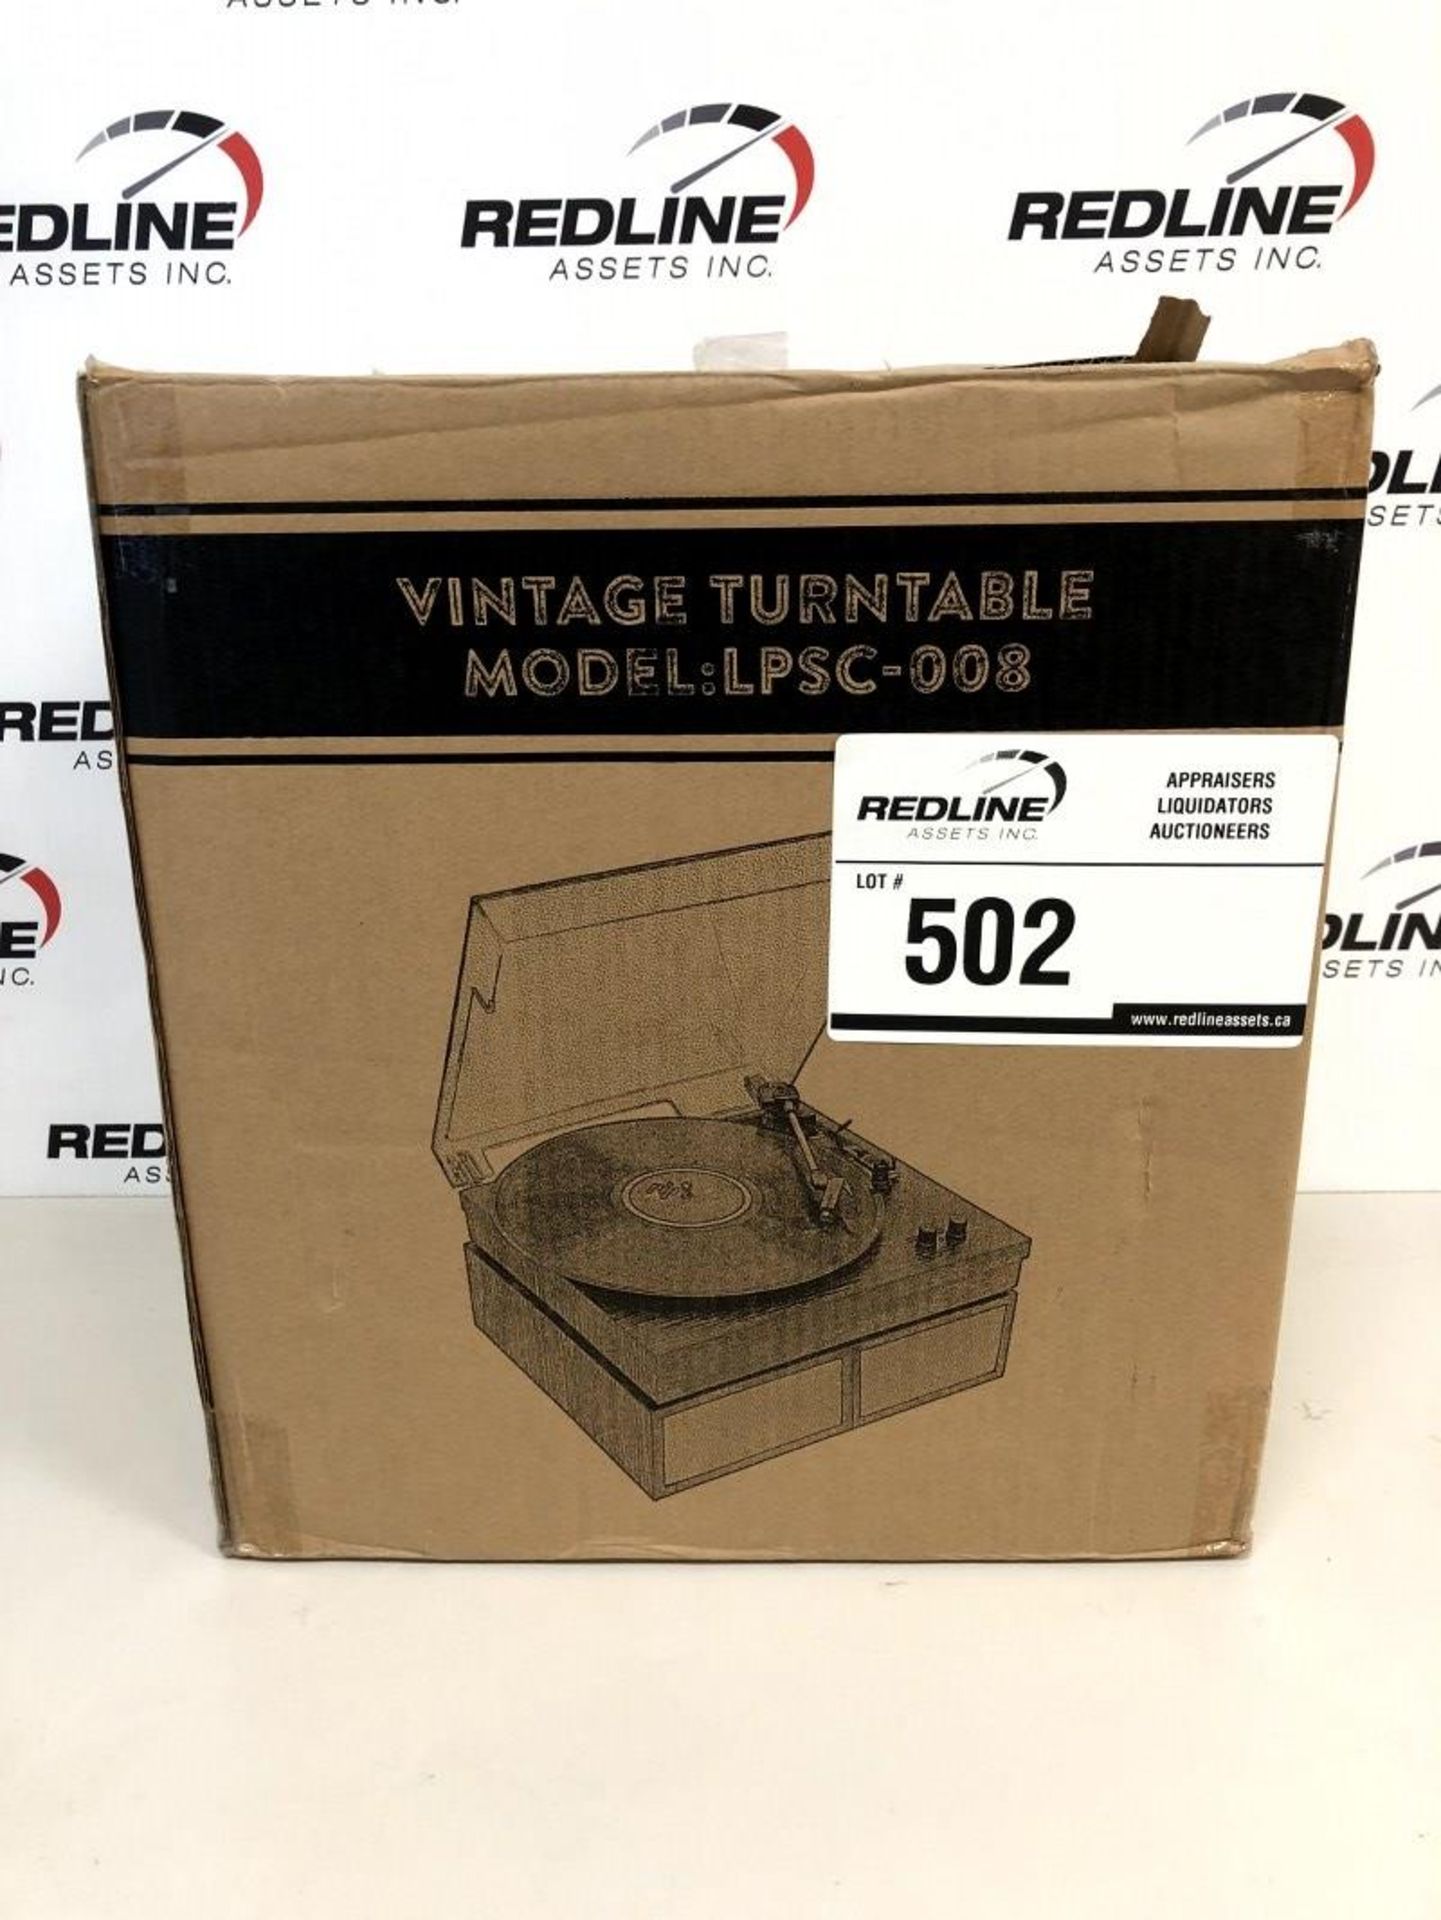 Vintage Turntable - Model -Lpsc-008